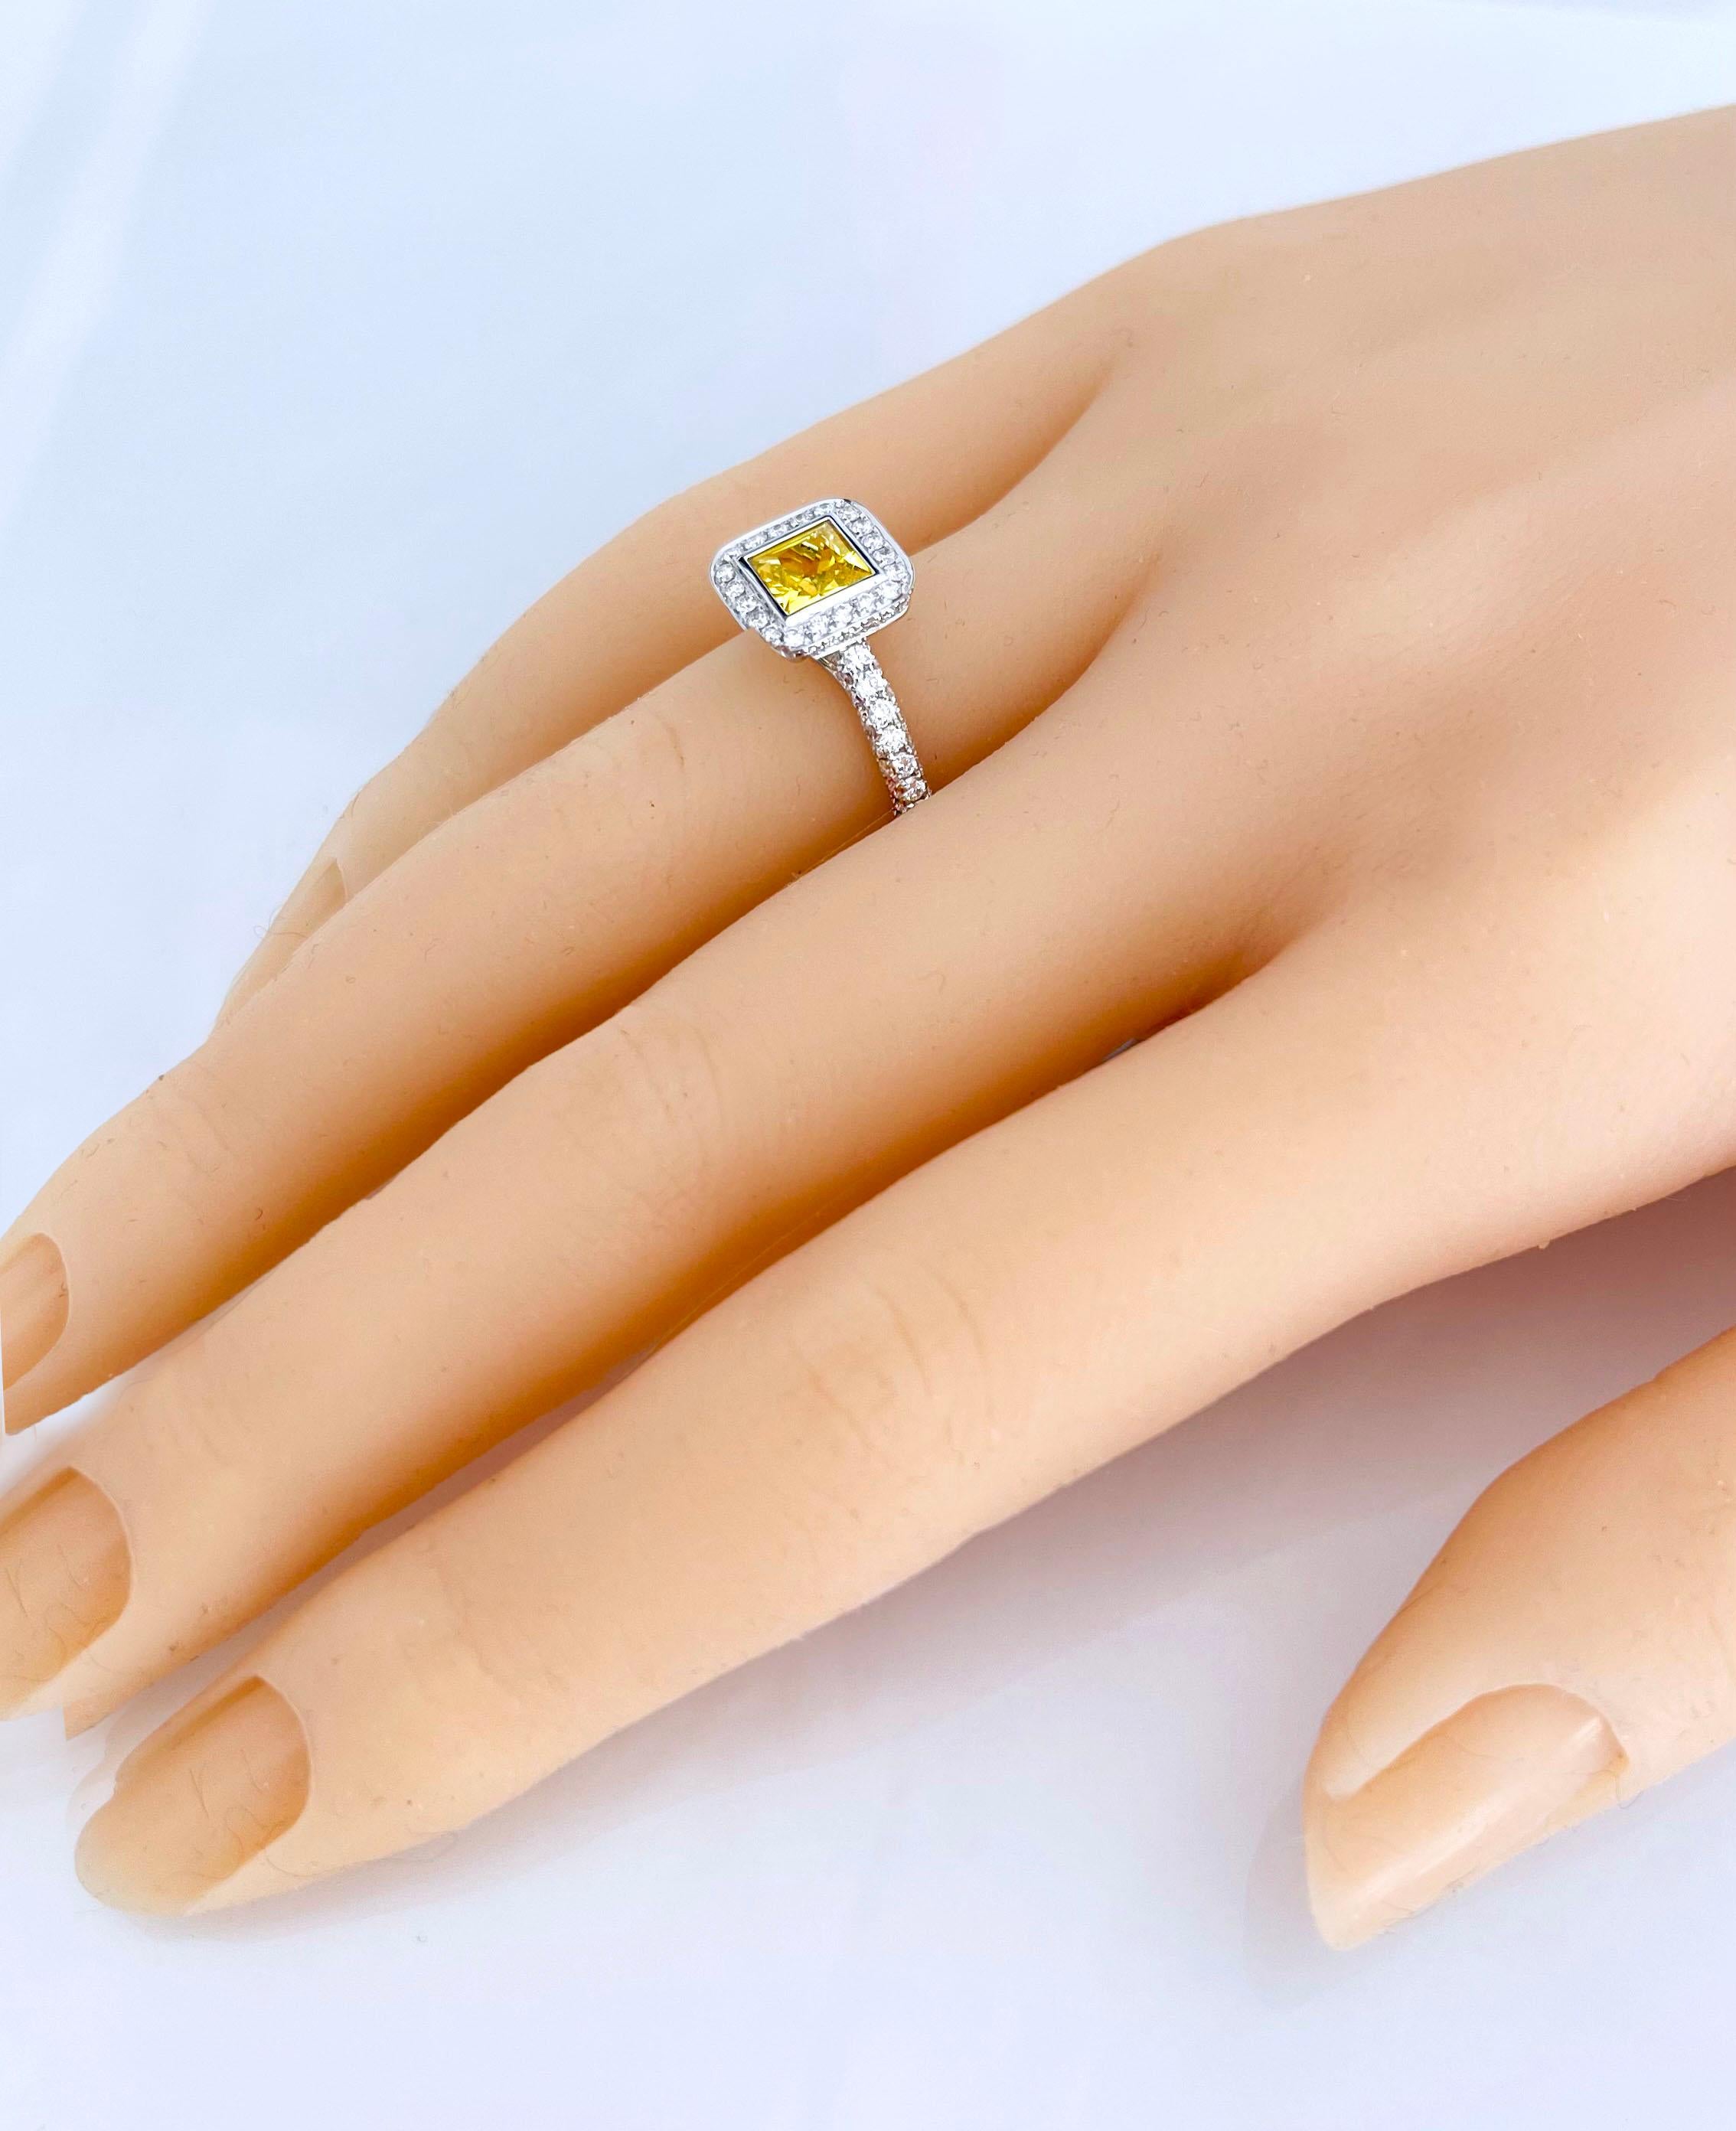 Princess Cut 18 Karat Gold Diamond Ring with Yellow Sapphire For Sale